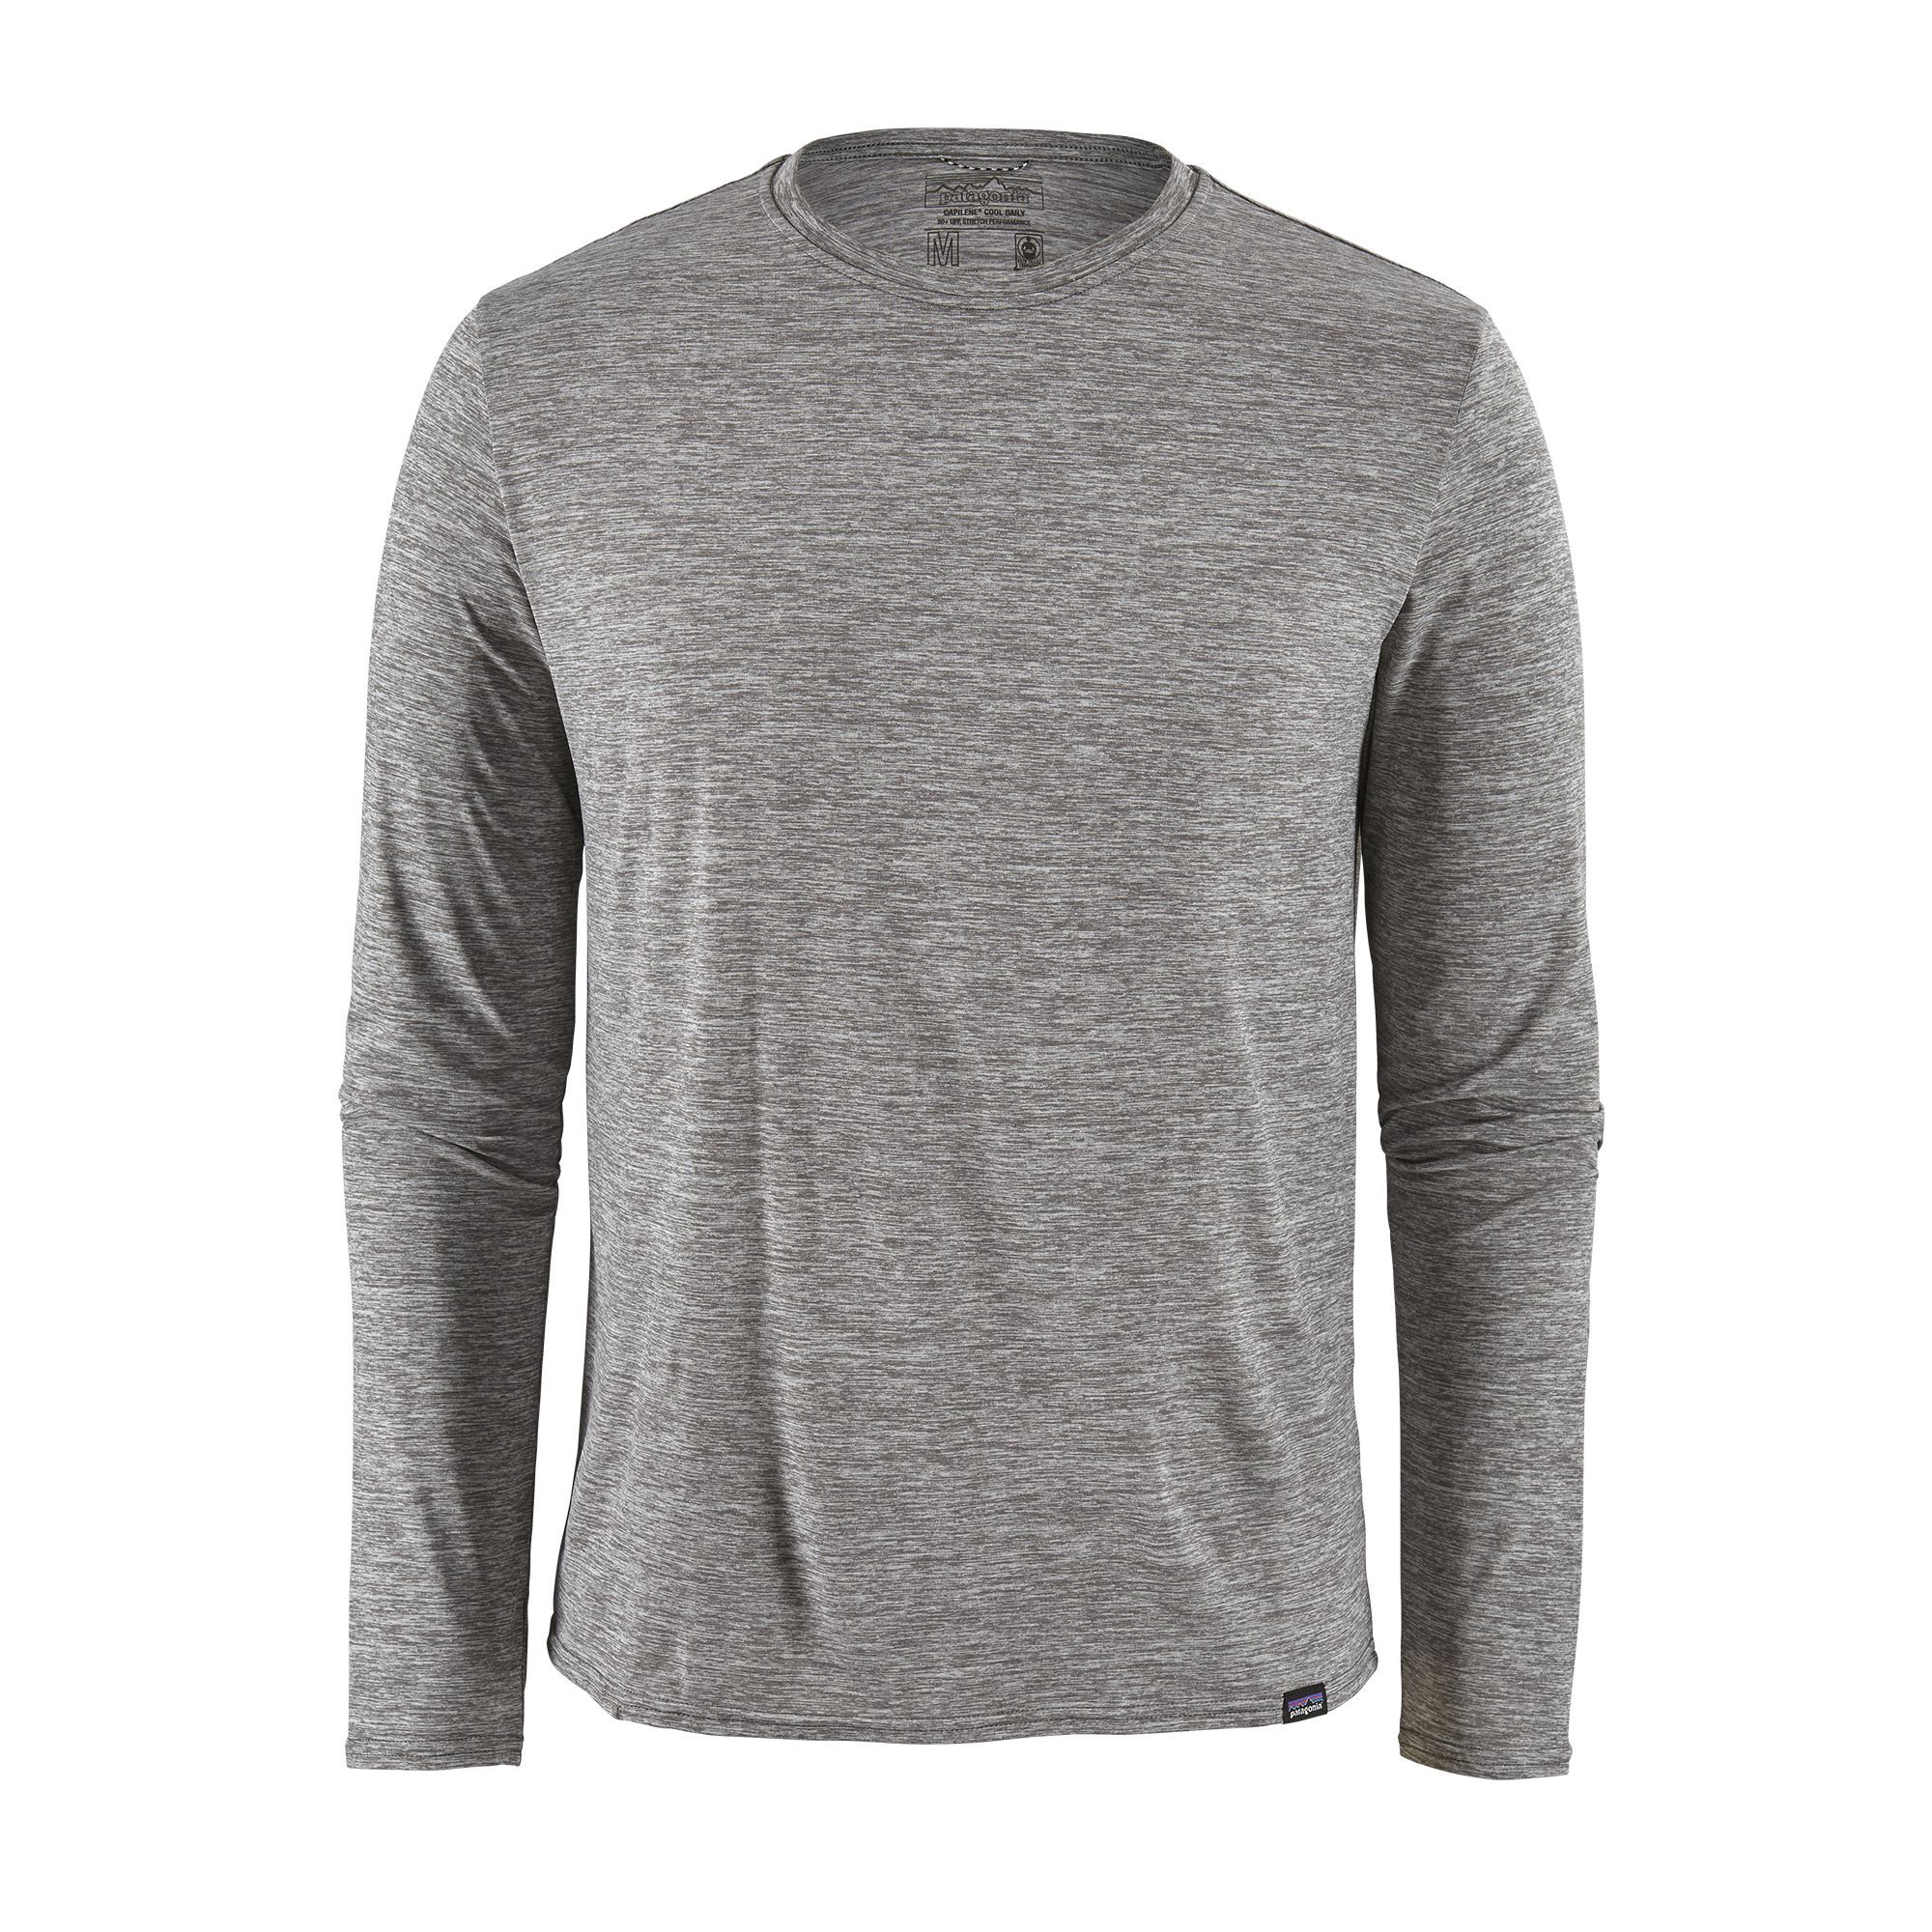 T-shirt Men's Long-Sleeved Capilene Cool Daily Shirt